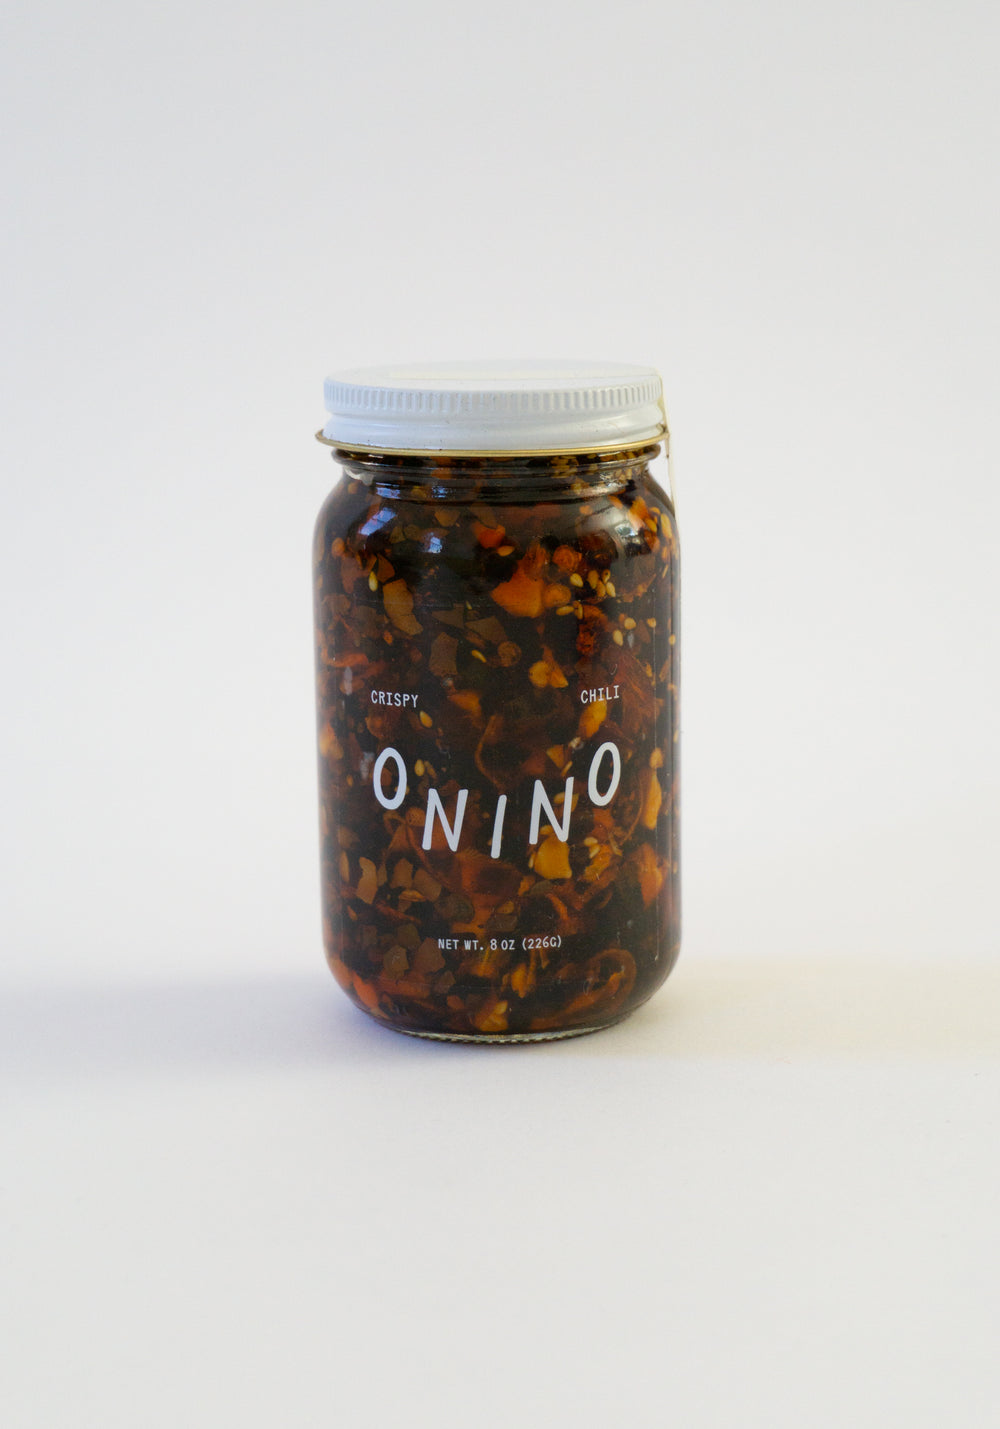 Onino Chili Oil